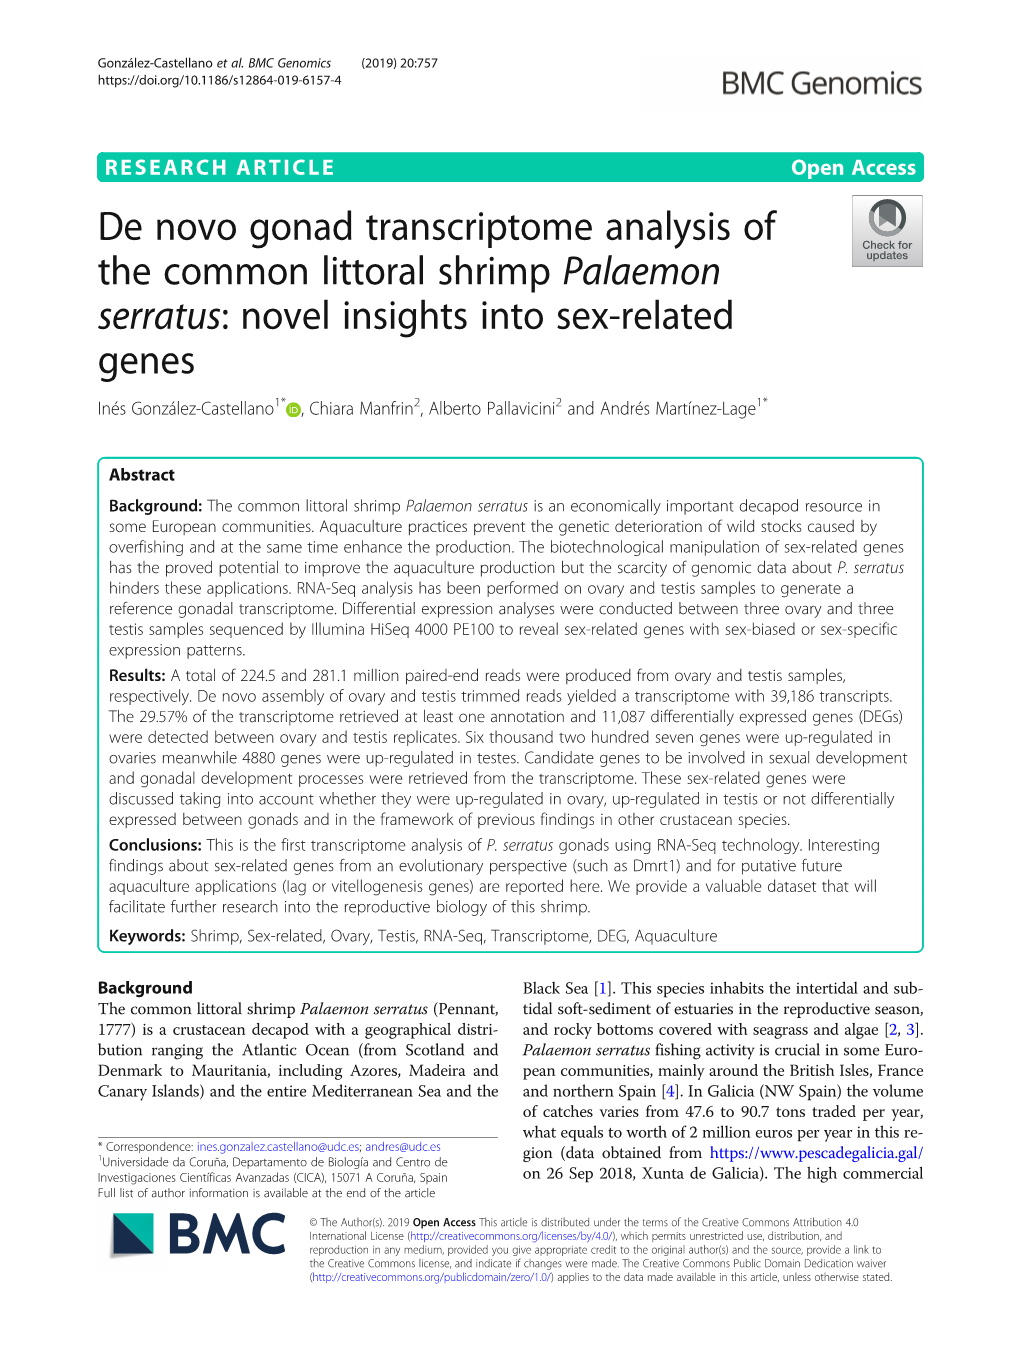 De Novo Gonad Transcriptome Analysis of the Common Littoral Shrimp